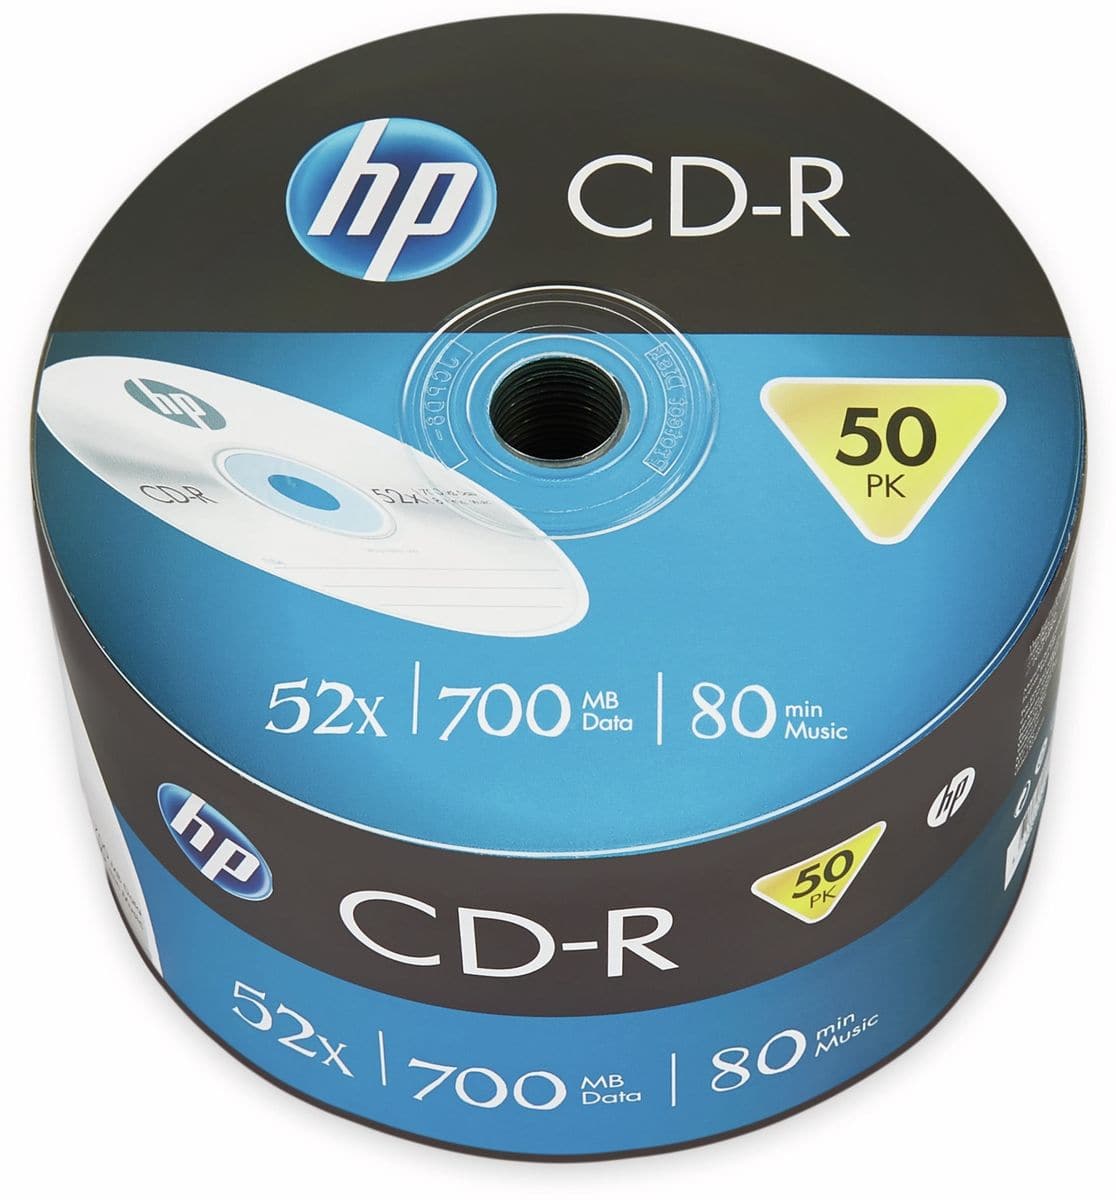 hp cd-r 80min, 700mb, 52x, bulk pack, 50 cds, surface silver